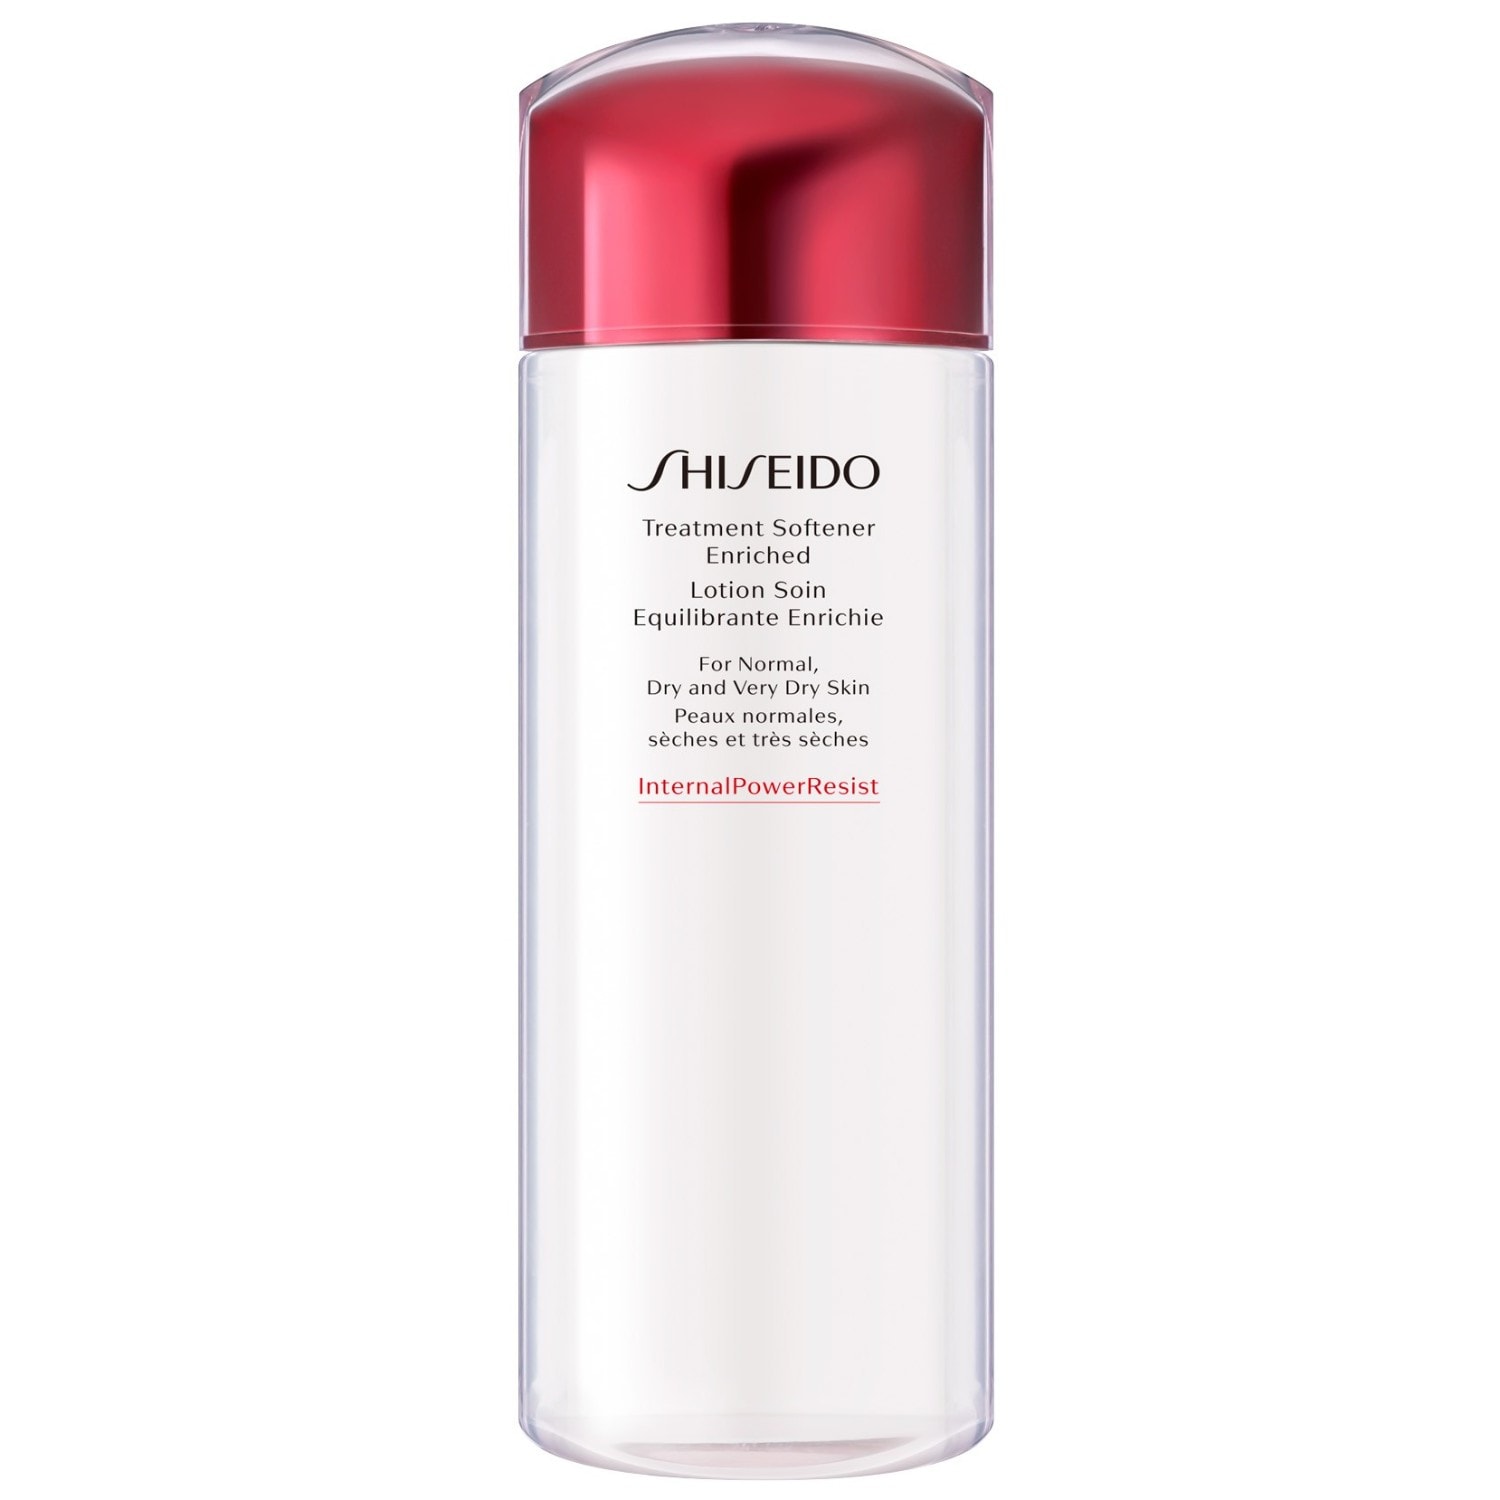 Shiseido Softener Enriched Treatment